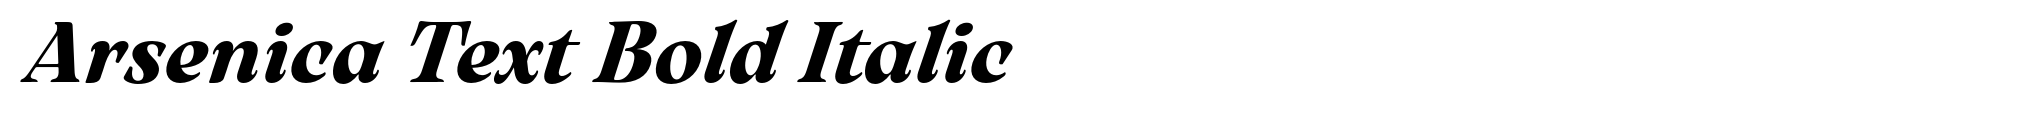 Arsenica Text Bold Italic image